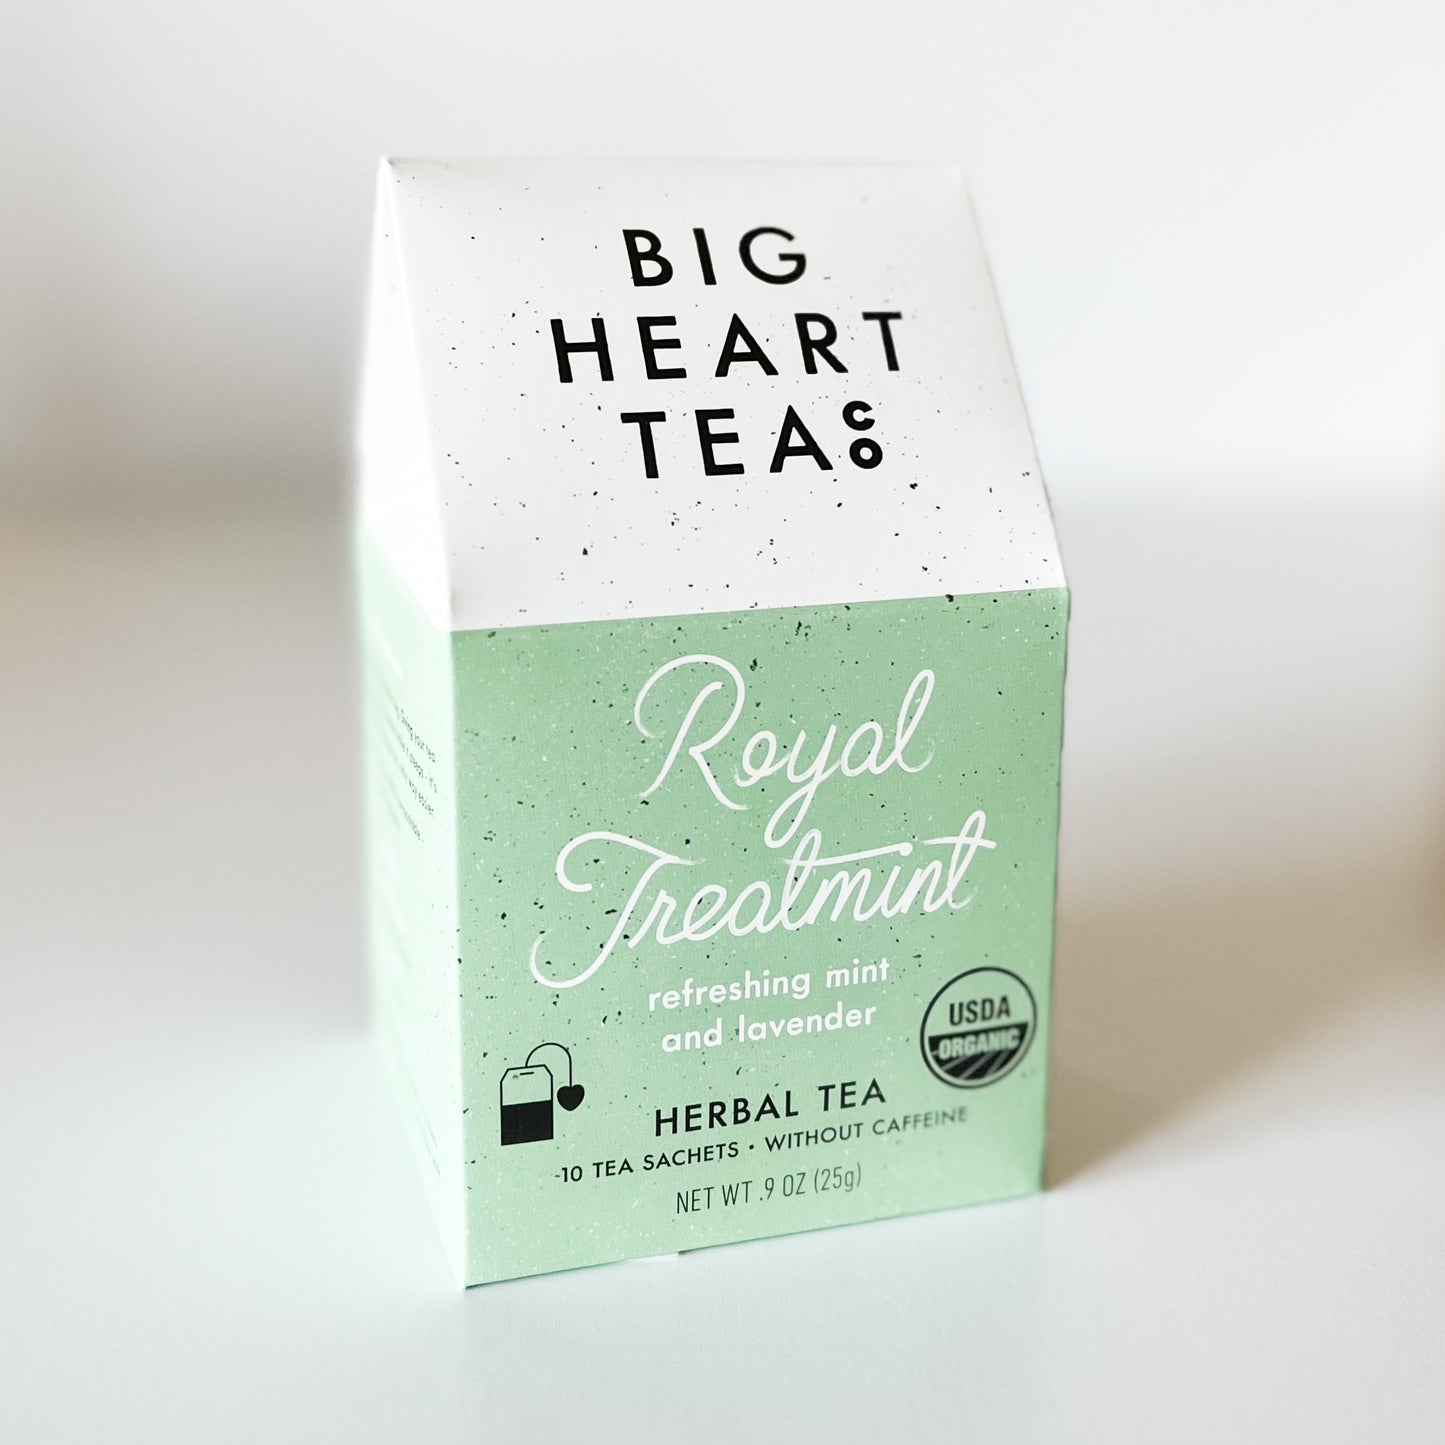 Big heart tea co Royal treatment teas herbal tea, 10 sachets 